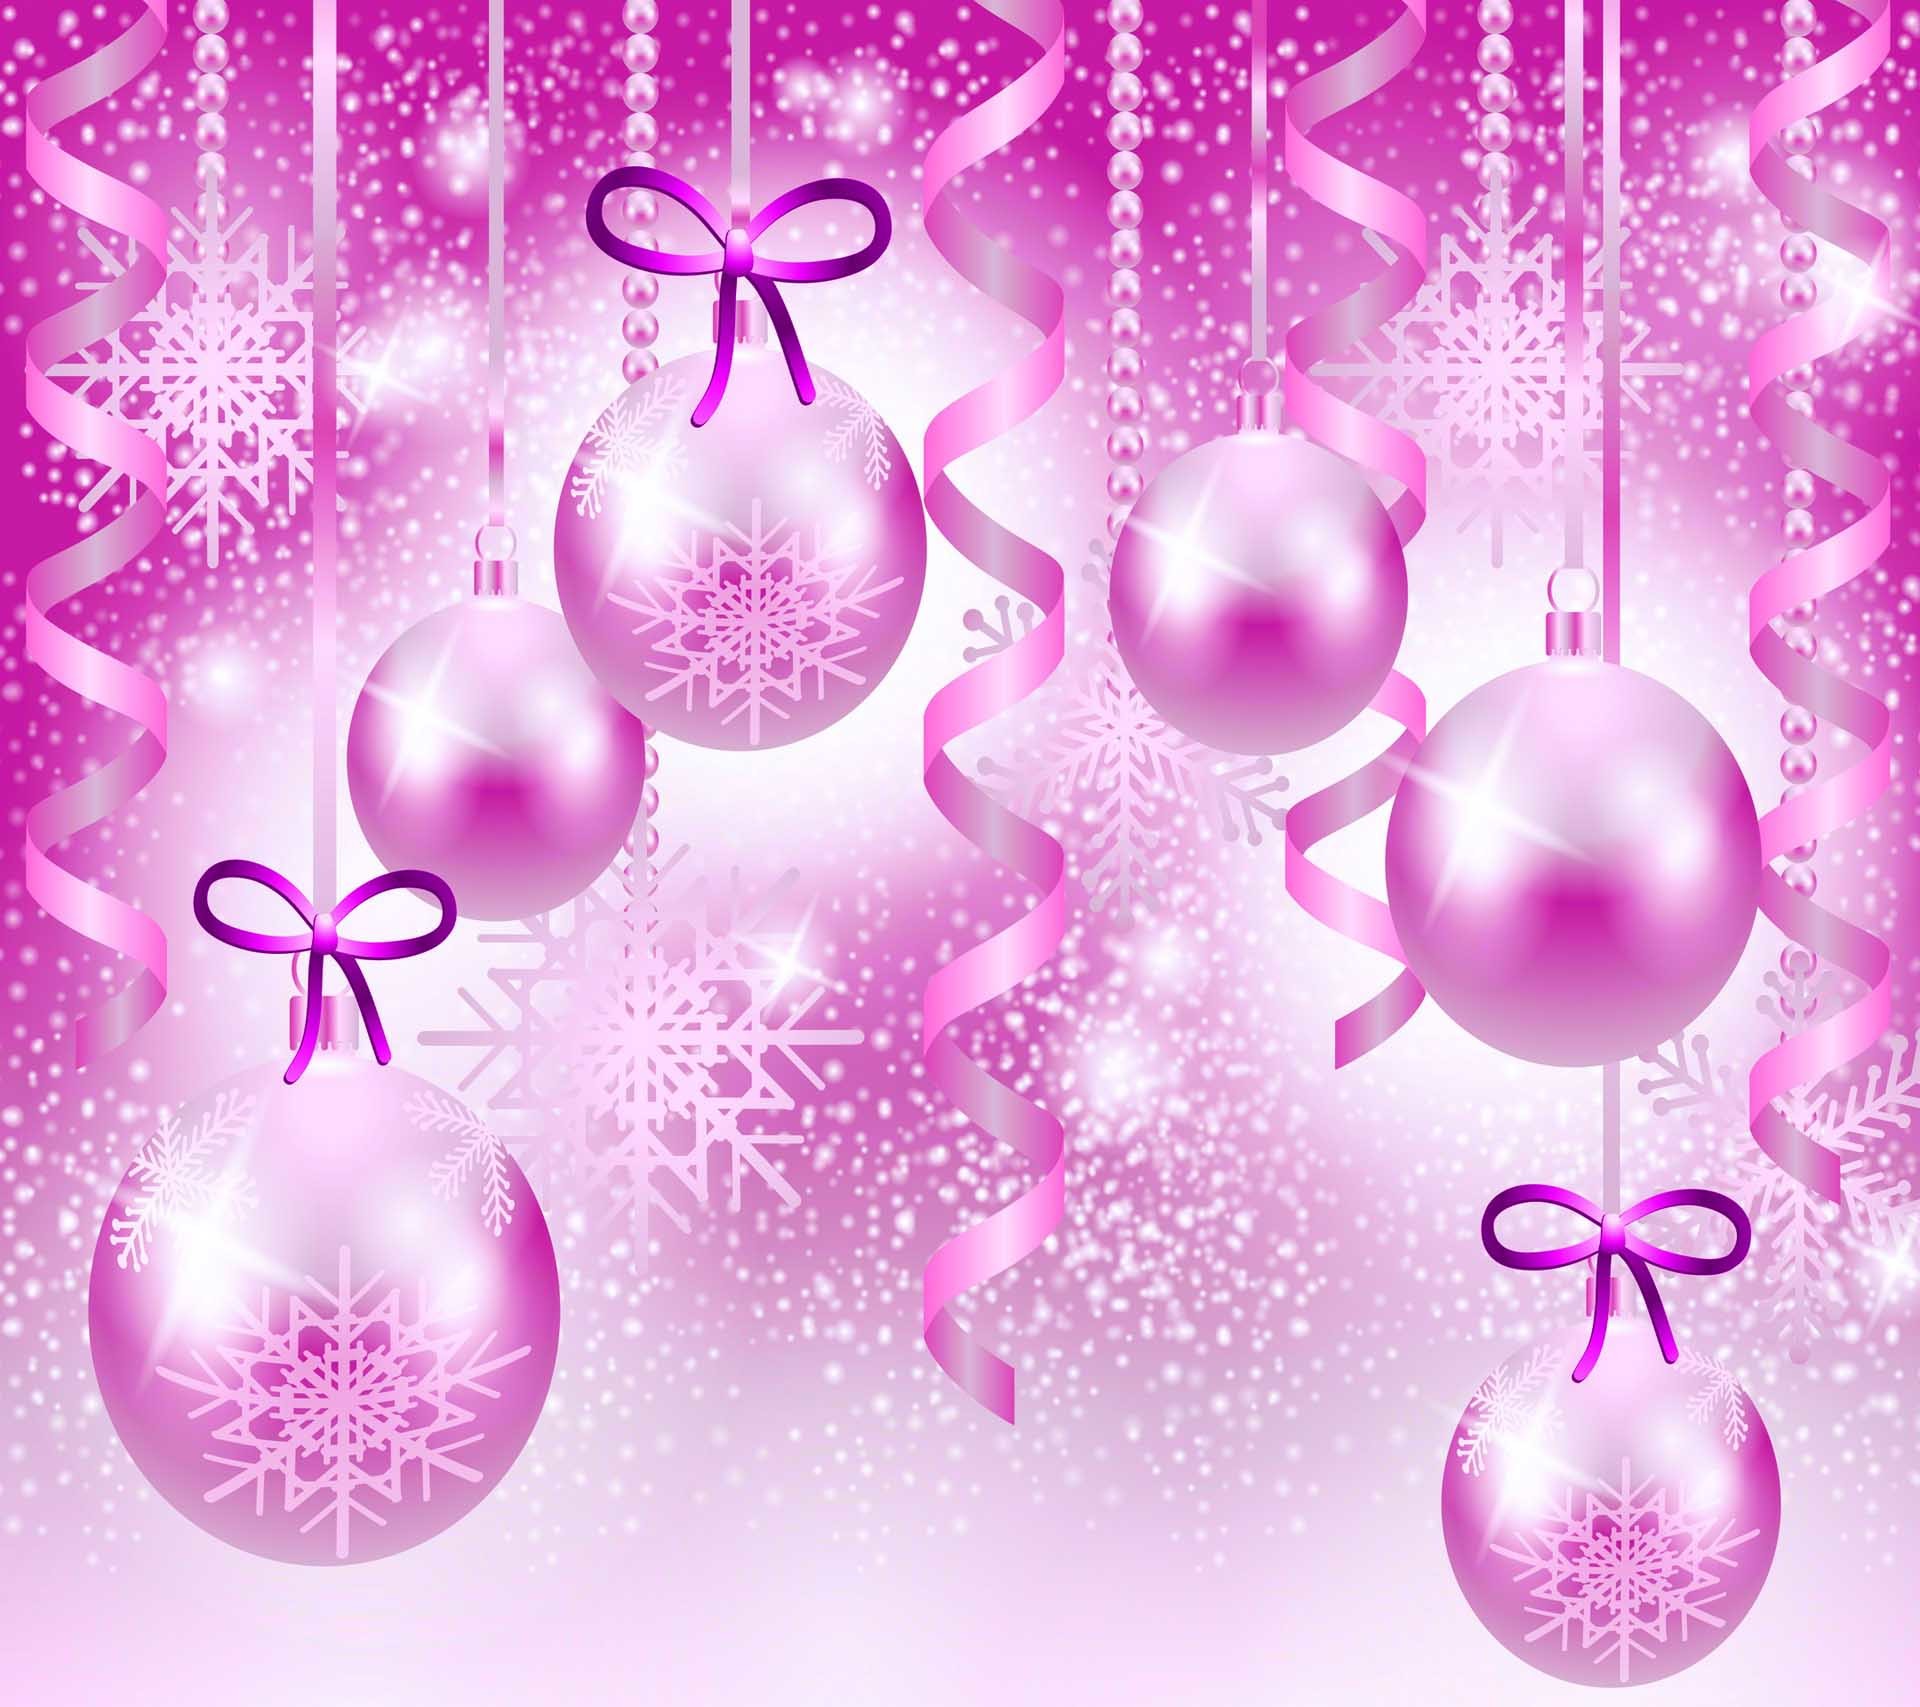 Pink Christmas mobile wallpaper aesthetic  Free Photo  rawpixel